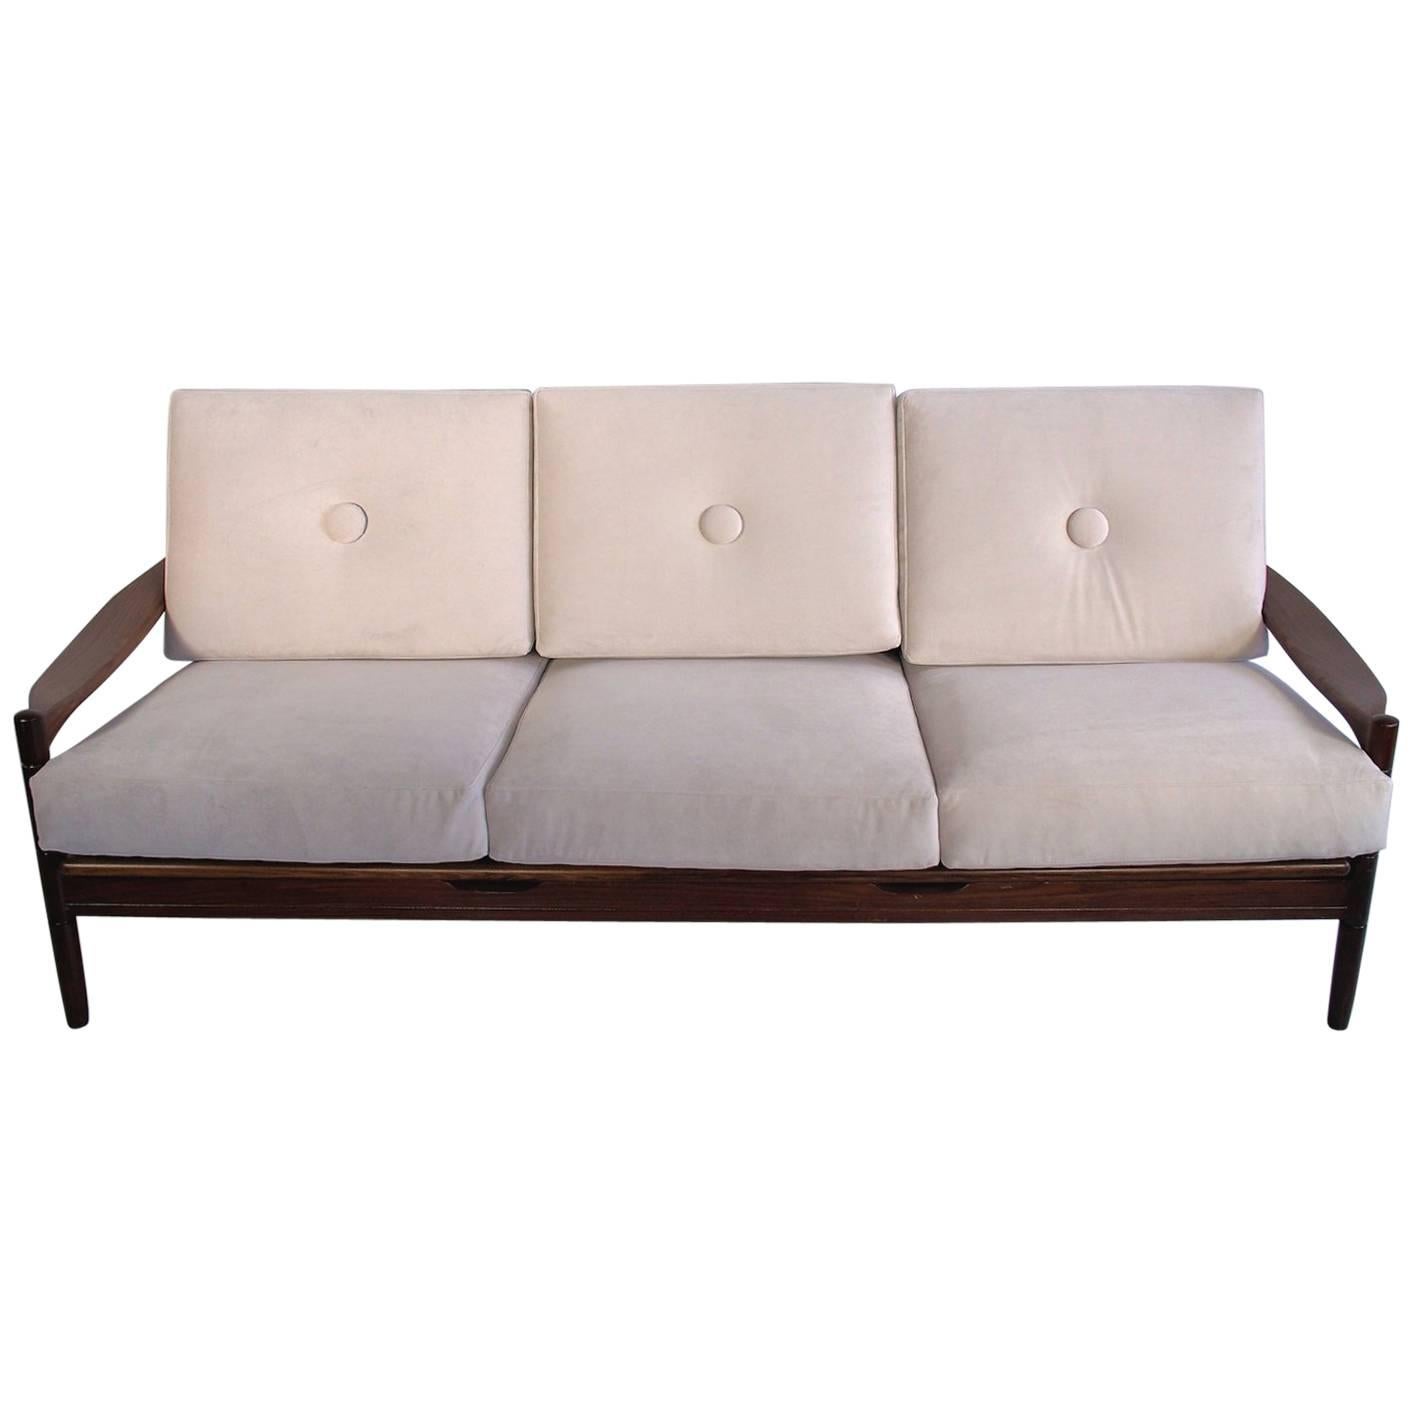 Scandinavian Modern Style Three-Seat White Sofa with Wooden Frame